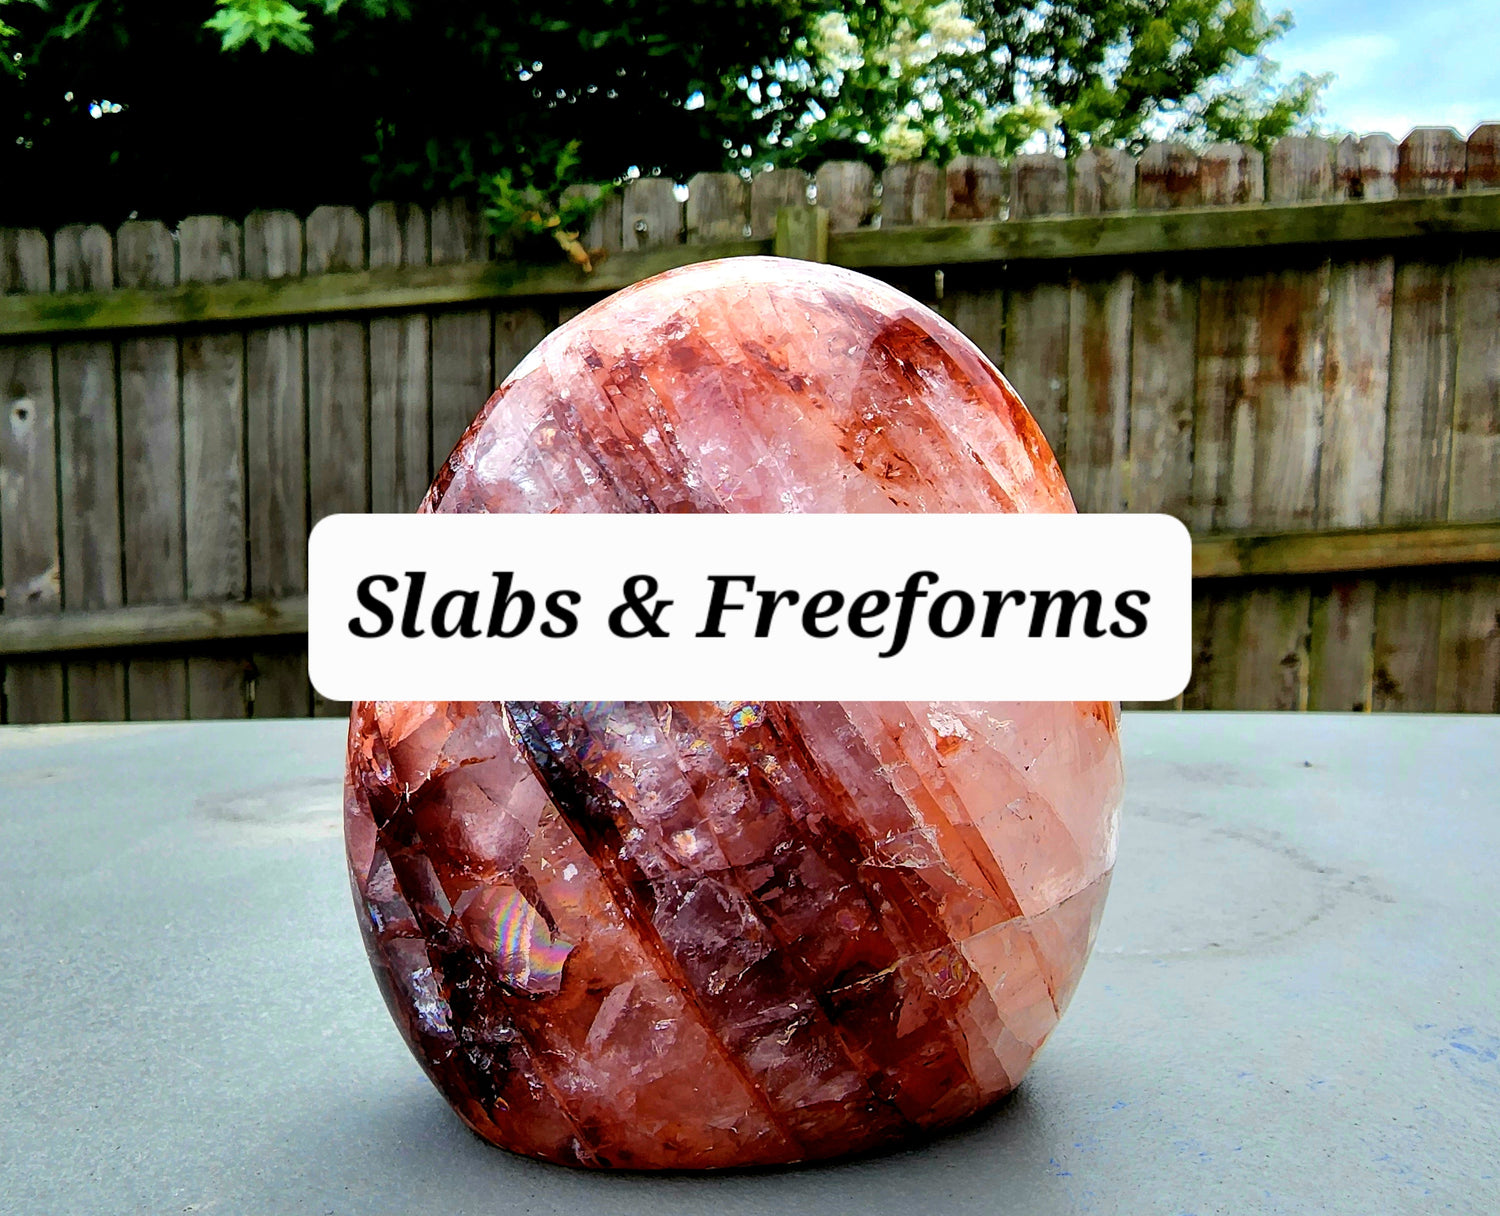 Slabs & Freeforms